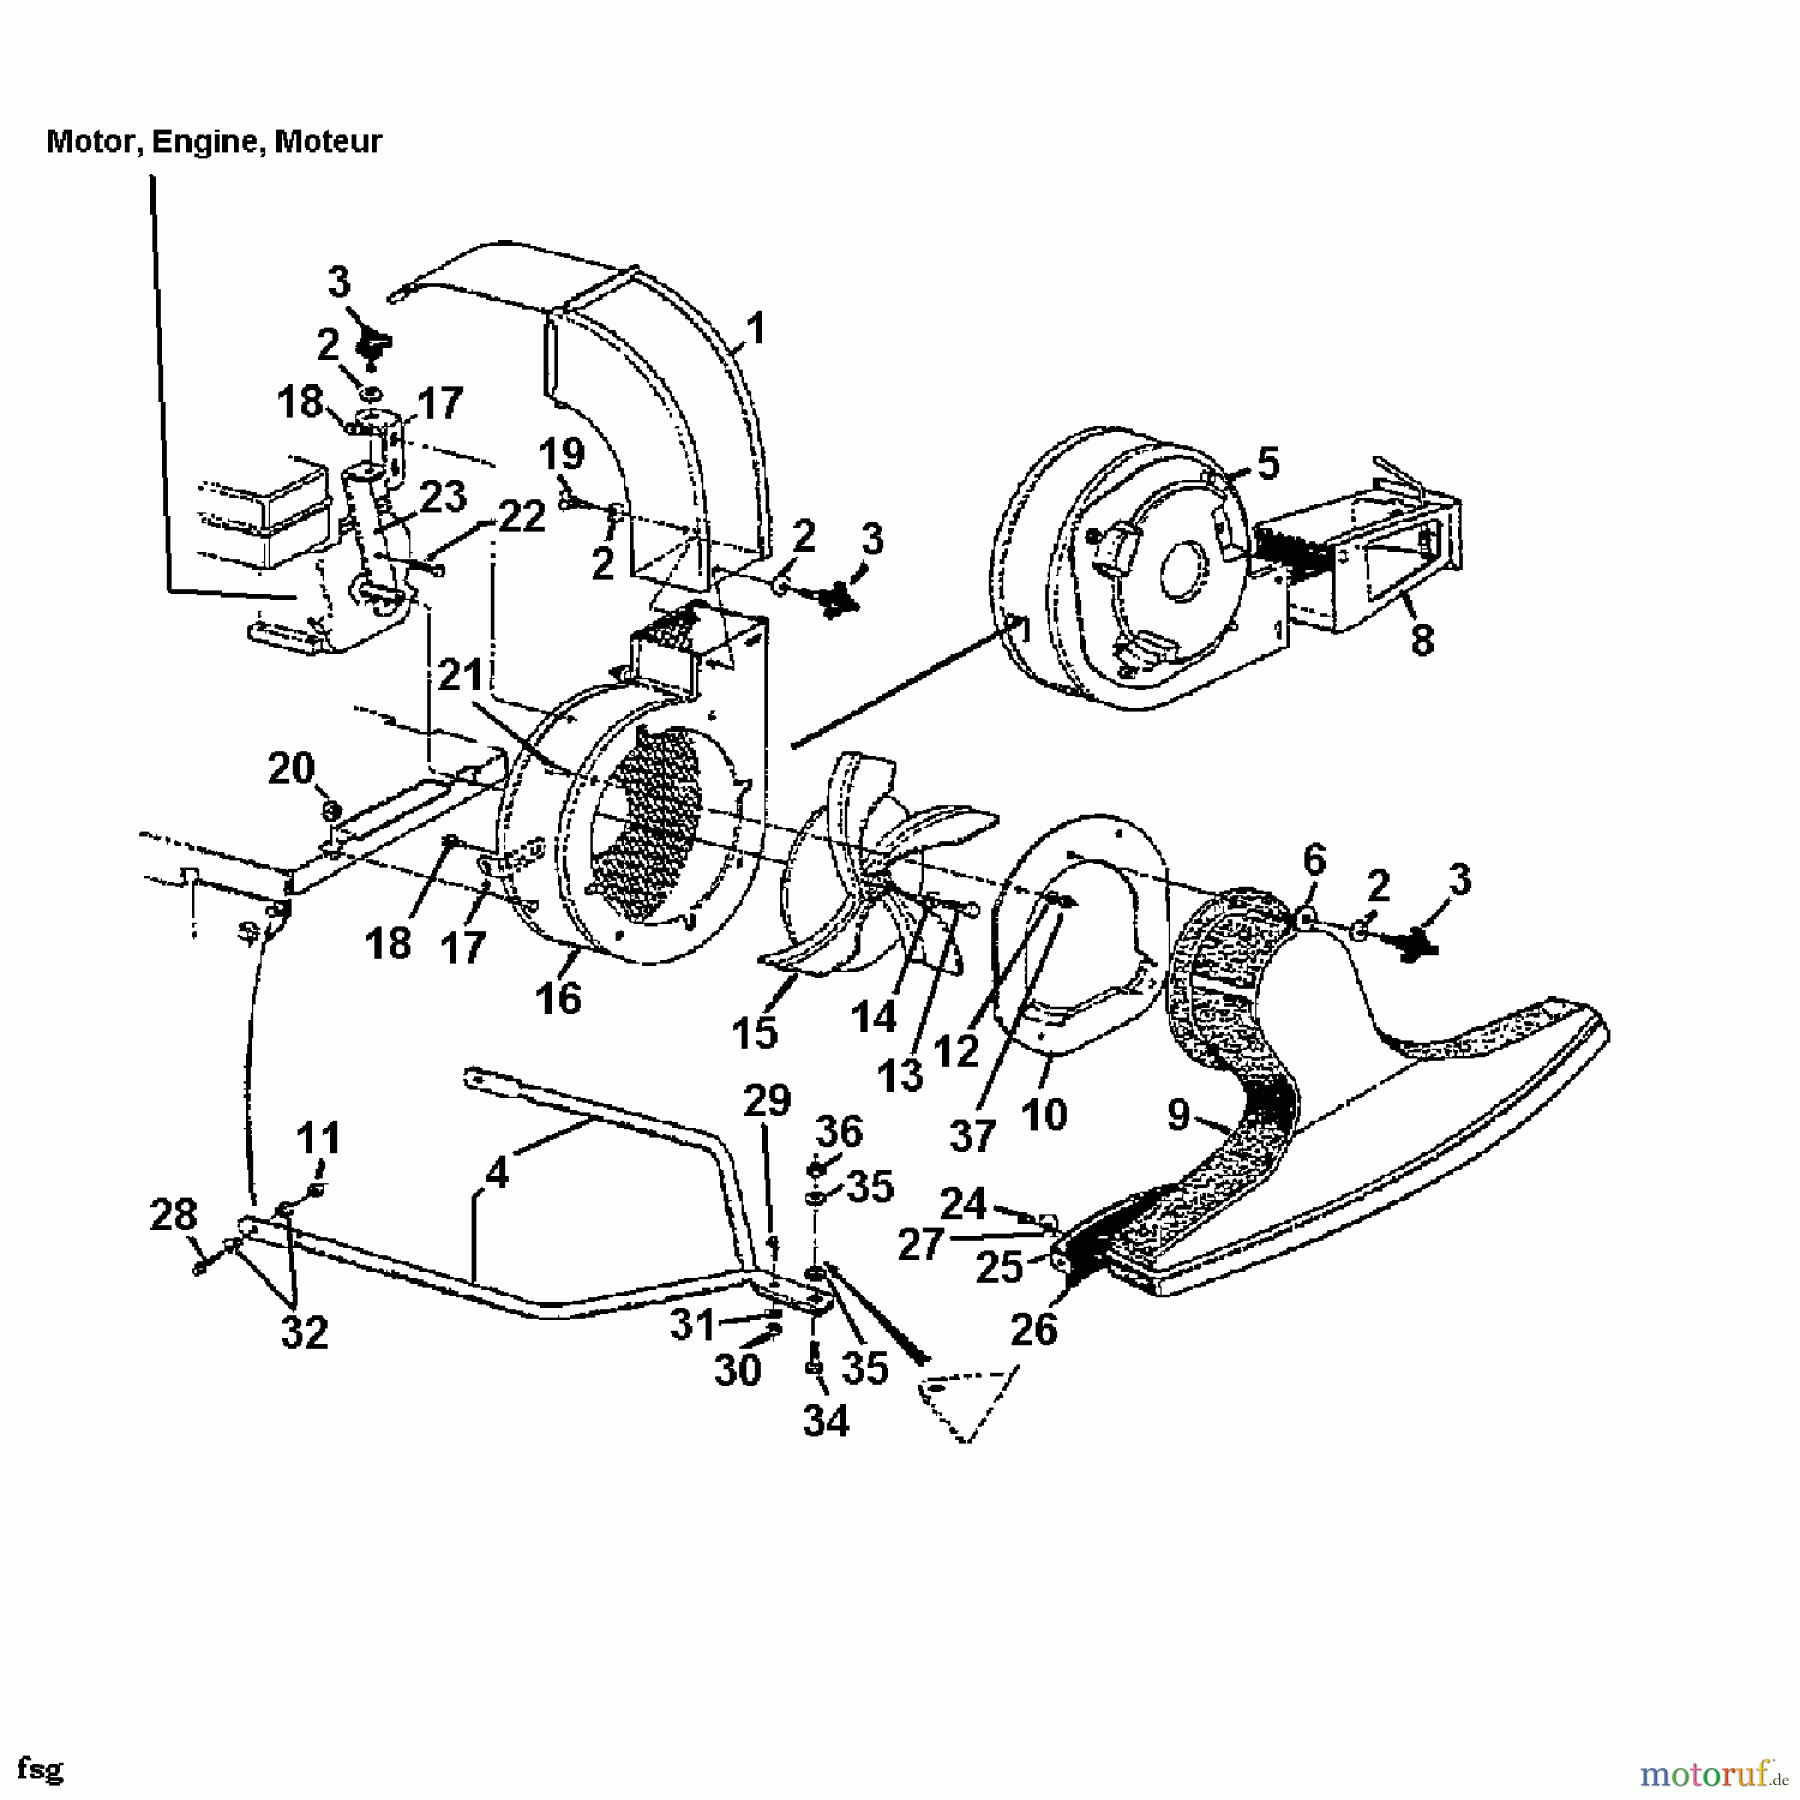  MTD Leaf blower, Blower vac 685 241-685-000  (1991) Nozzle, Hopper